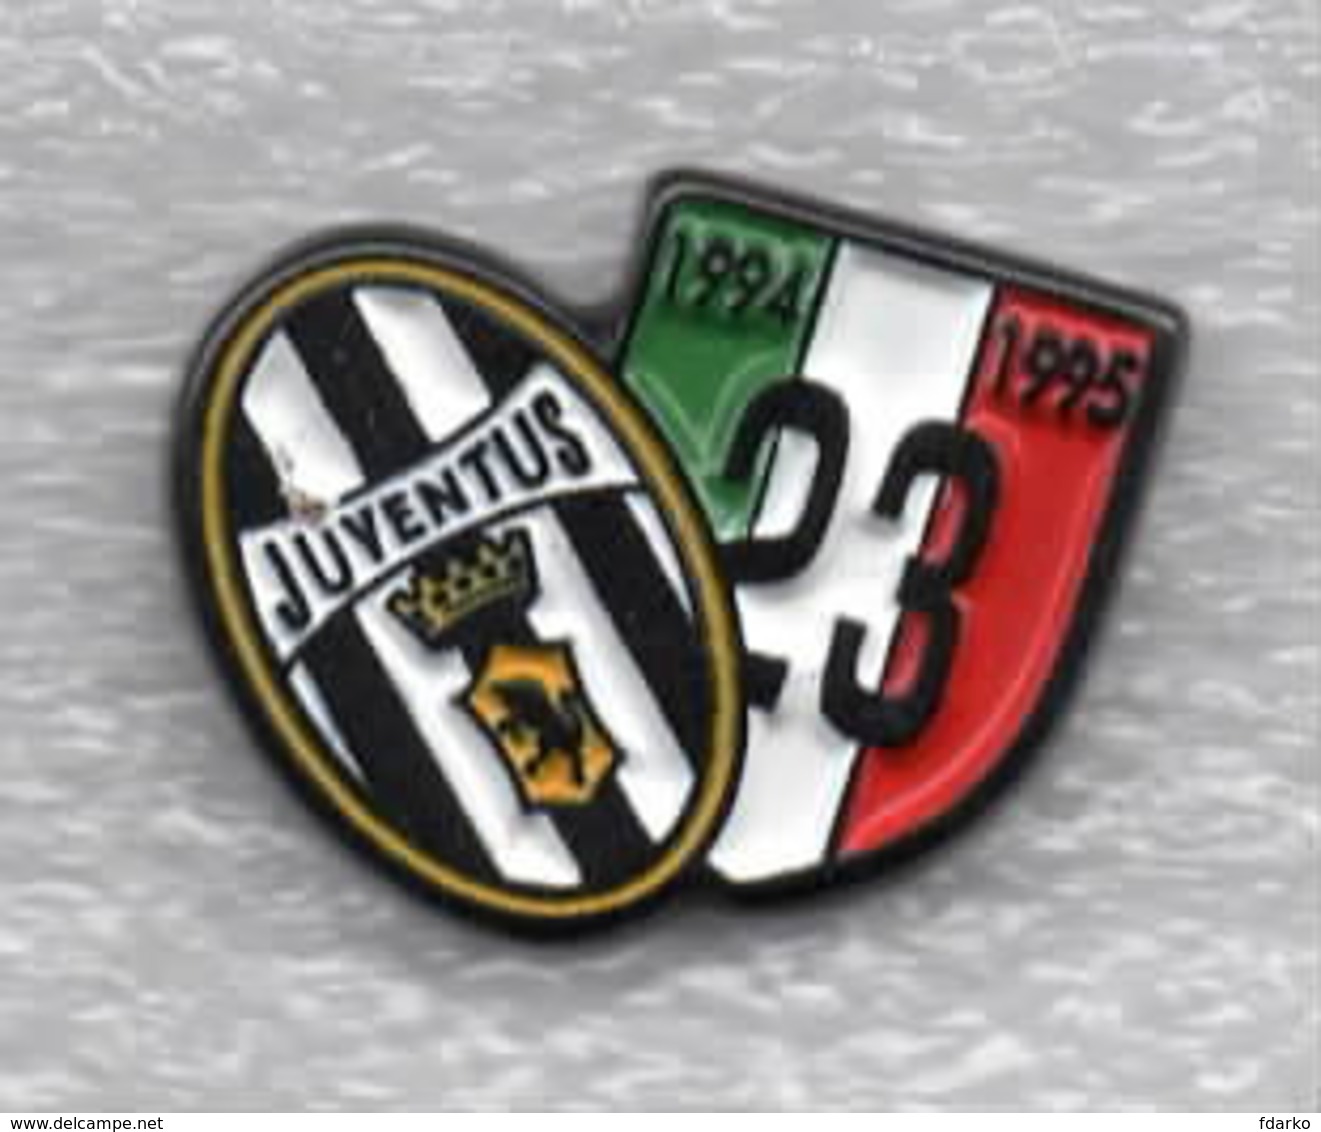 Juventus Torino Calcio Scudetto 23° Ufficiale Giemme Juve Torino Soccer Pins Spilla Italy Toro Granata - Calcio